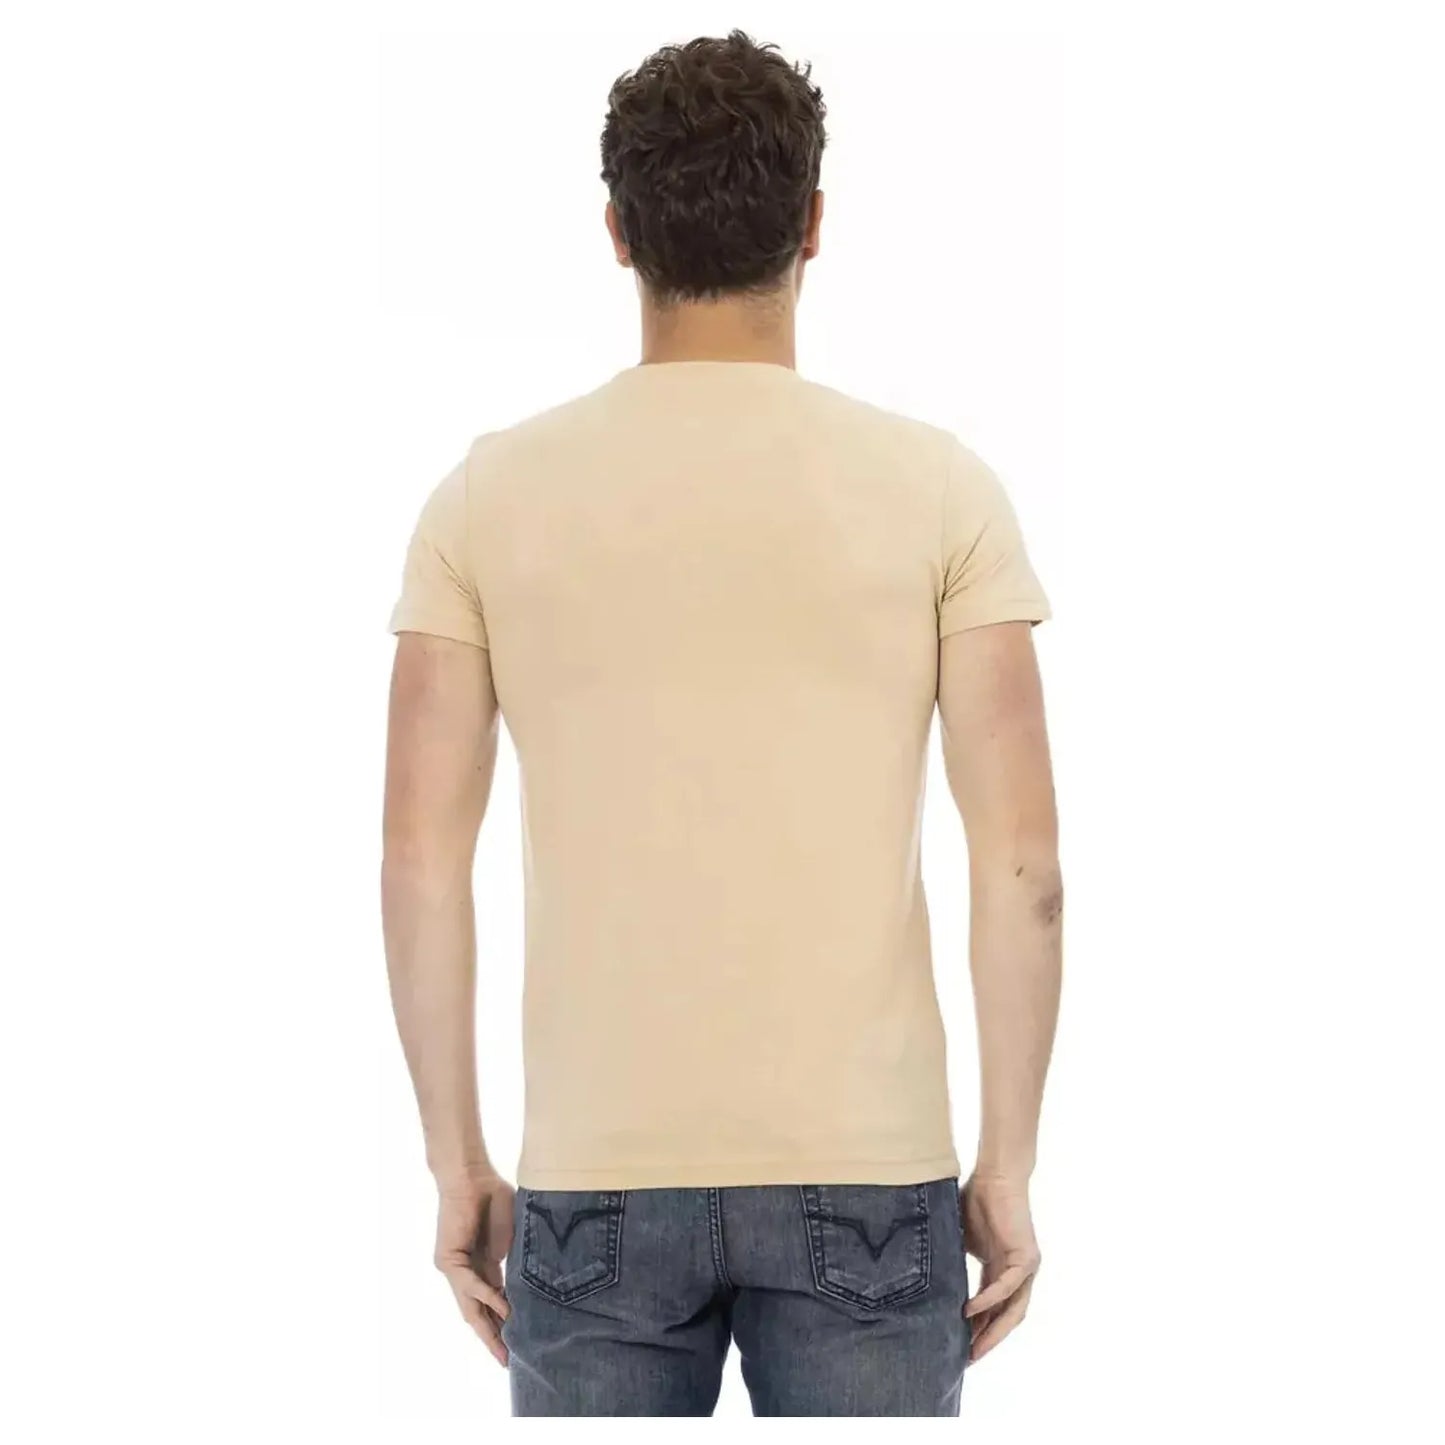 Trussardi Action Elegant Beige Round Neck Tee with Chic Print beige-cotton-t-shirt-2 product-22897-1677762922-17-63d94117-858.webp